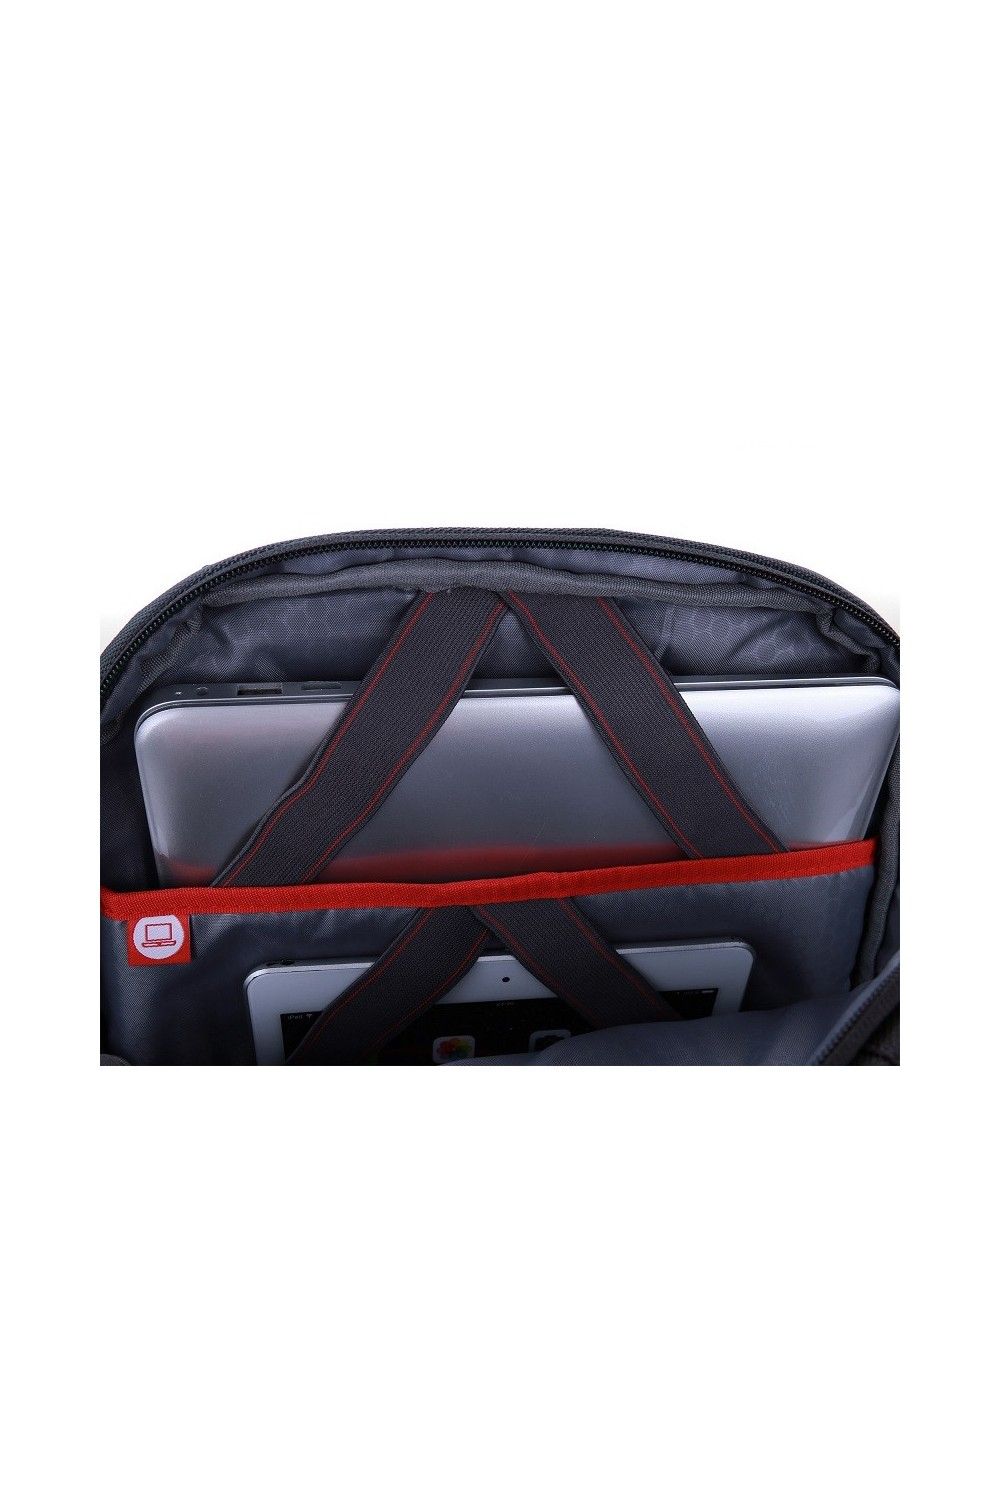 Roncato laptop backpack ZAINO 2 14.1 inches